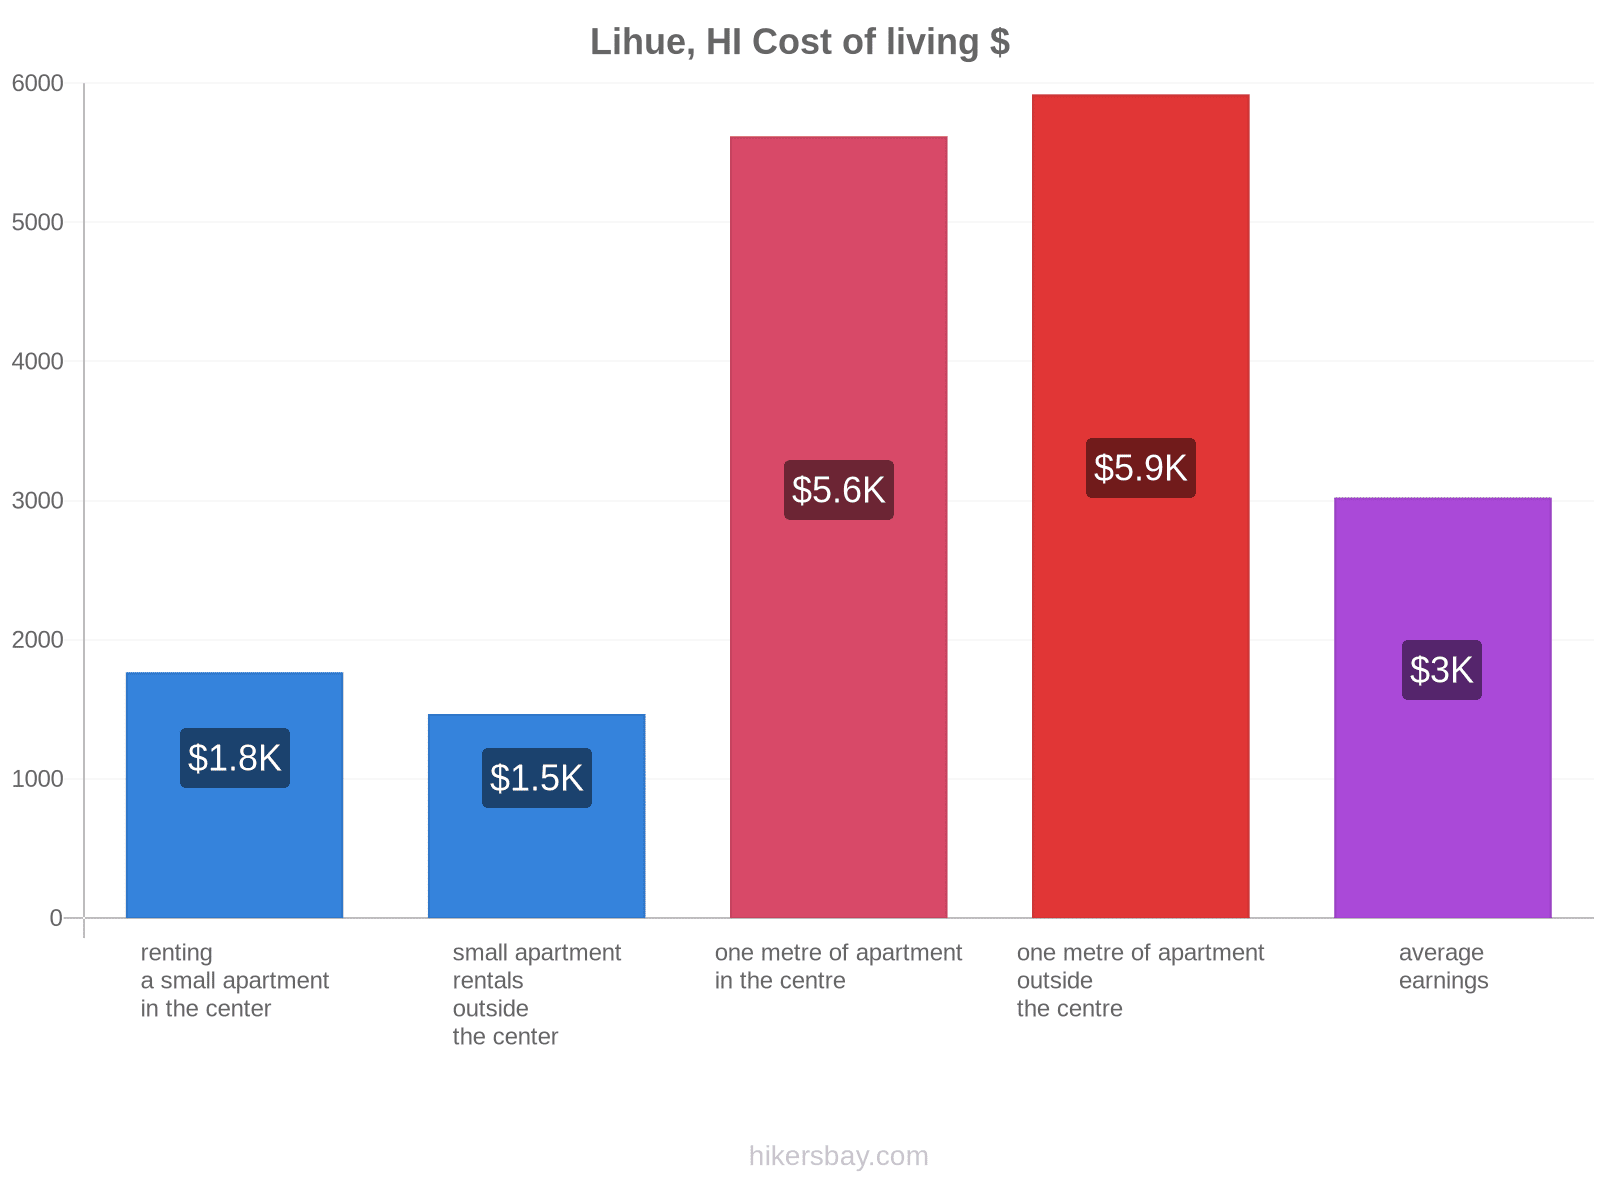 Lihue, HI cost of living hikersbay.com